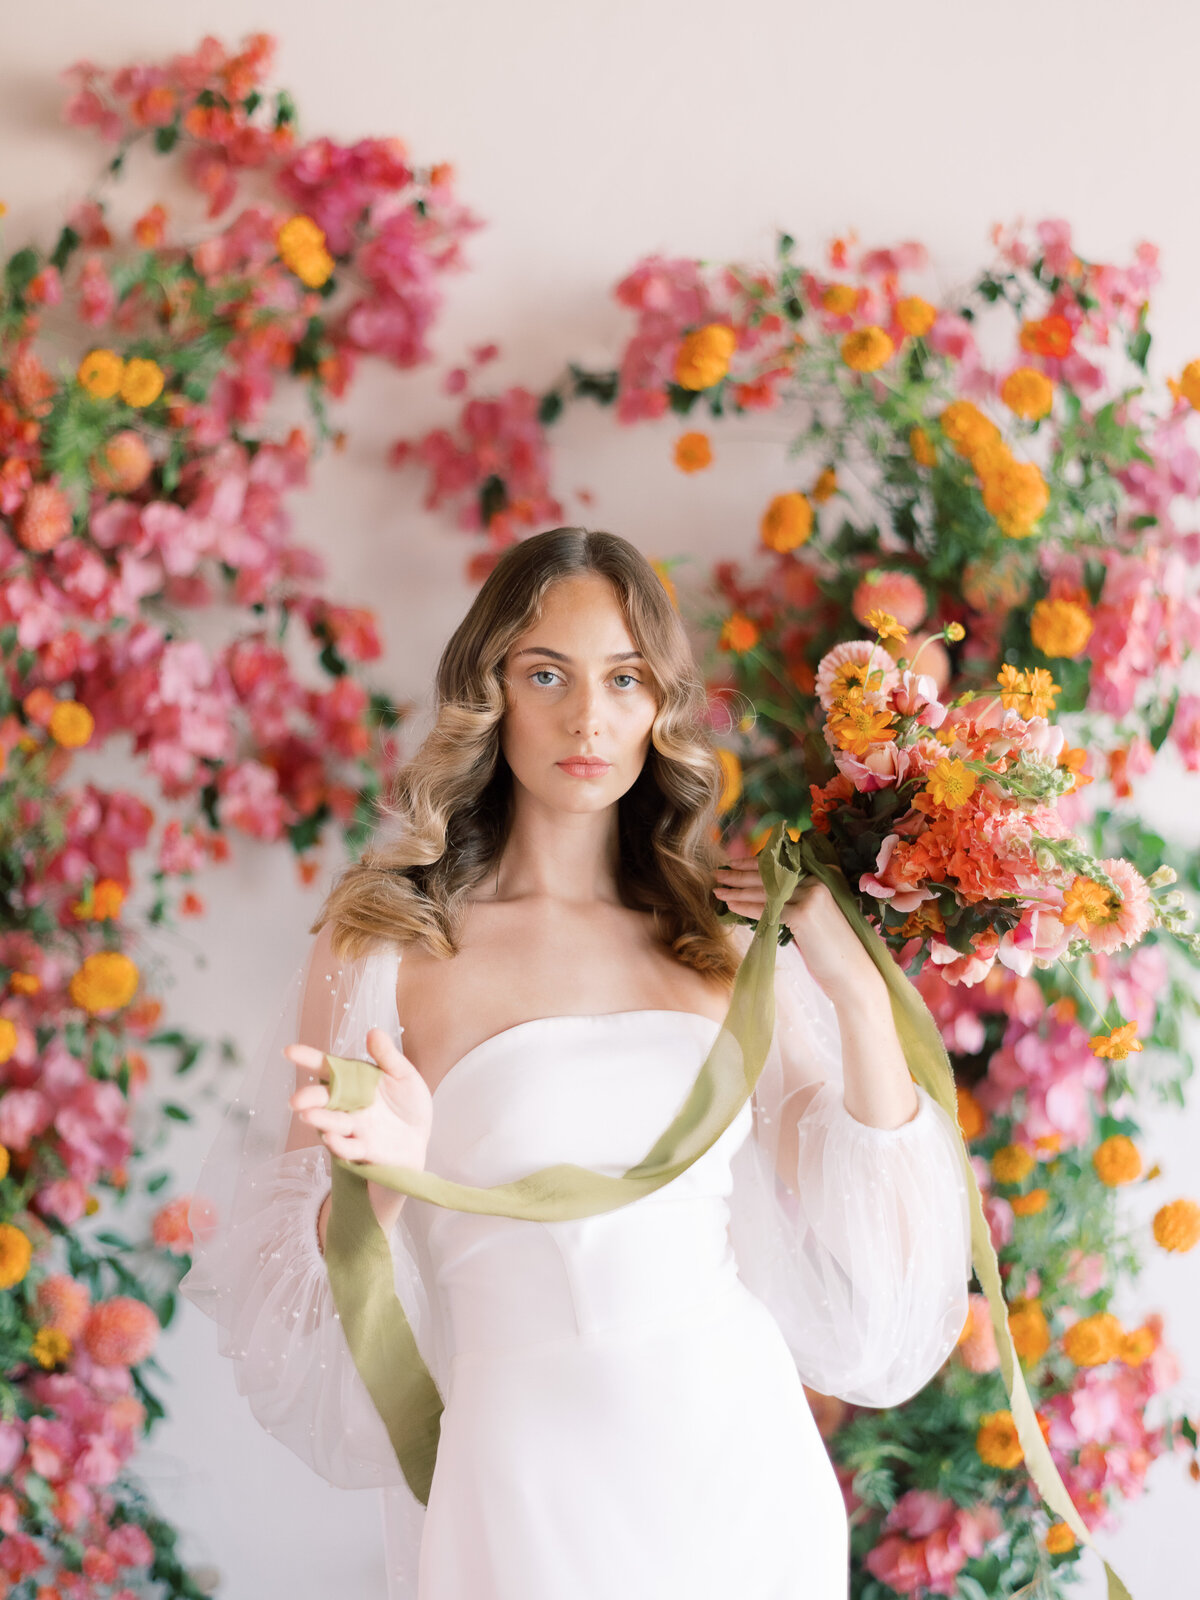 Sarah Rae Floral Designs Wedding Event Florist Flowers Kentucky Chic Whimsical Romantic Weddings30